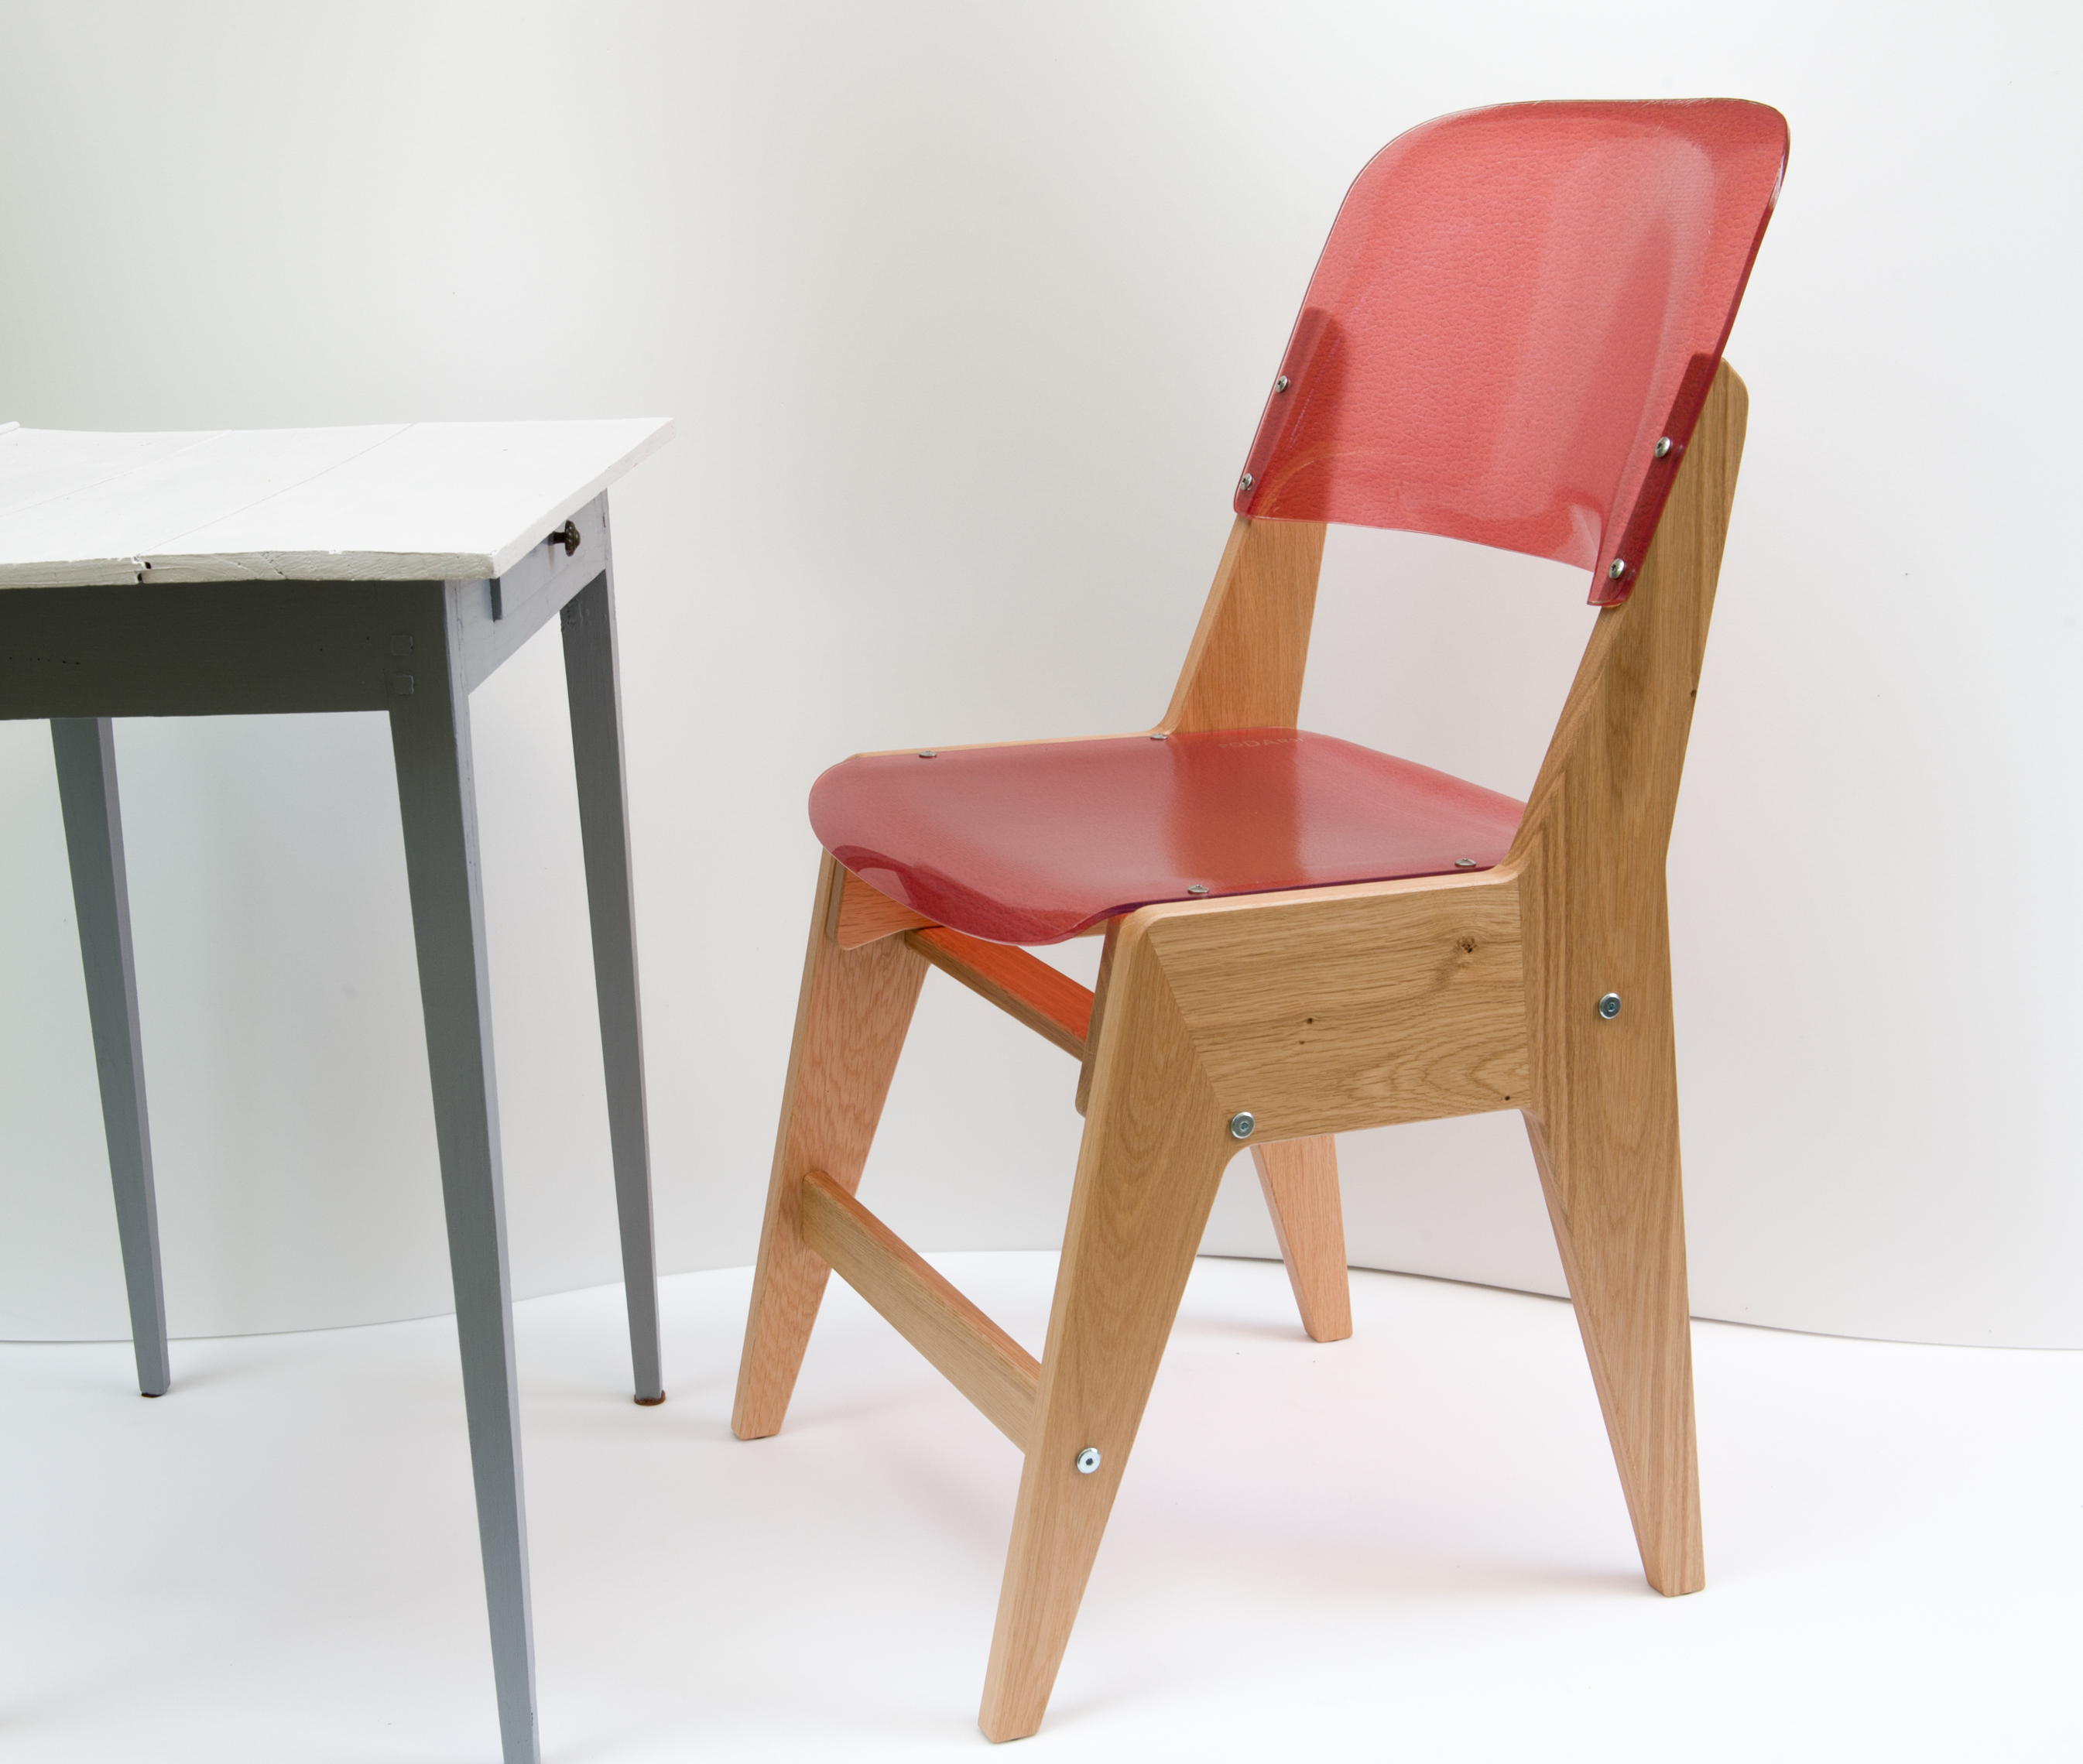 Chaise française en bois, made in Vercors